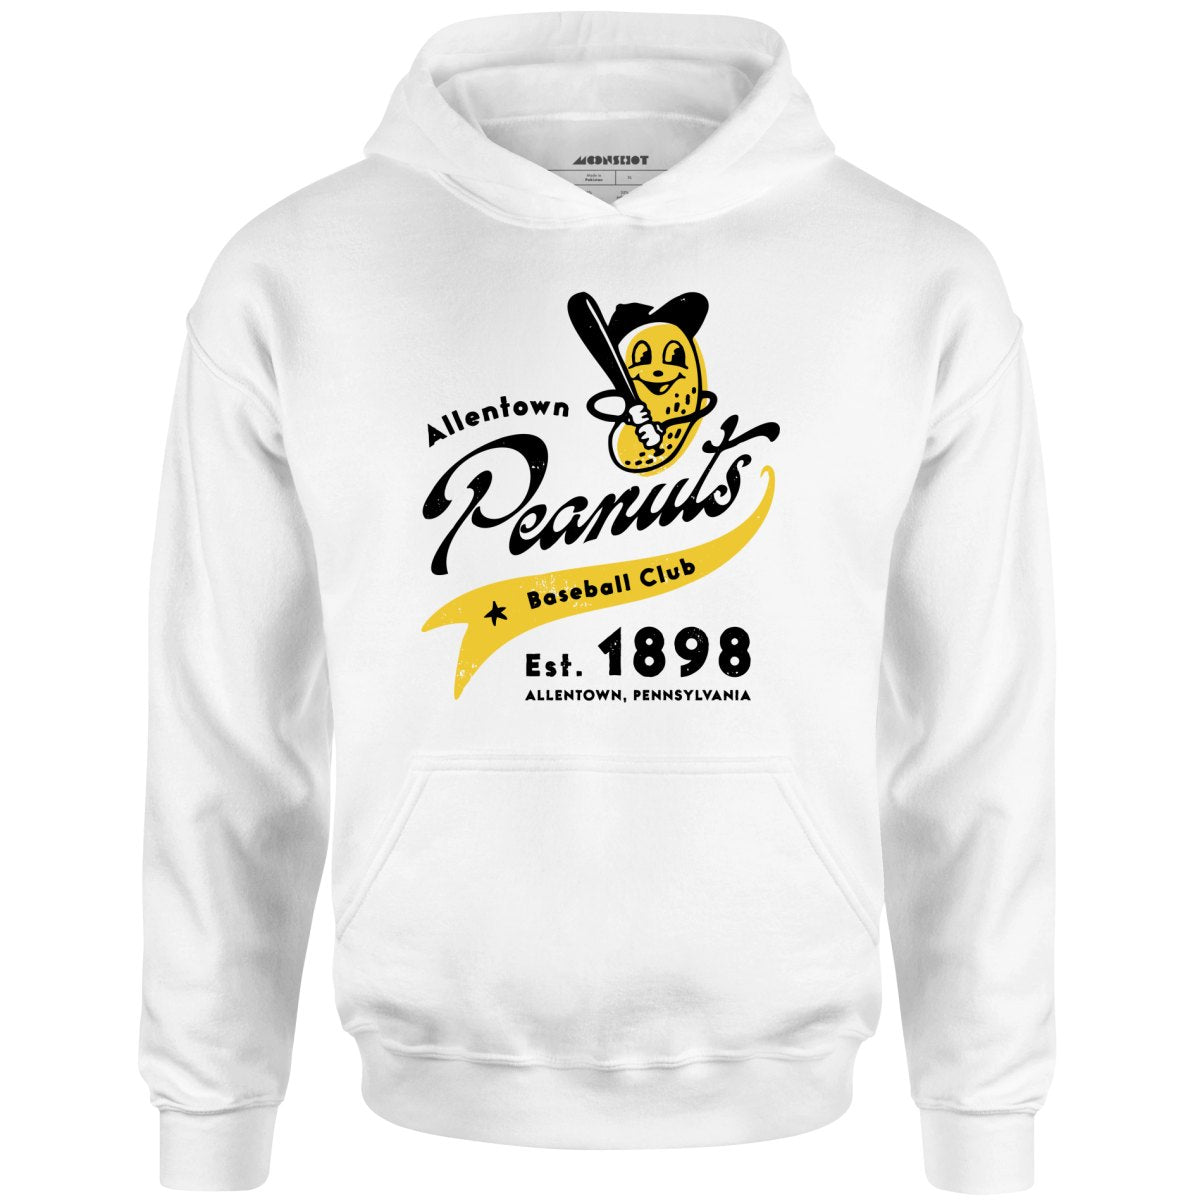 Allentown Peanuts - Pennsylvania - Vintage Defunct Baseball Teams - Unisex Hoodie